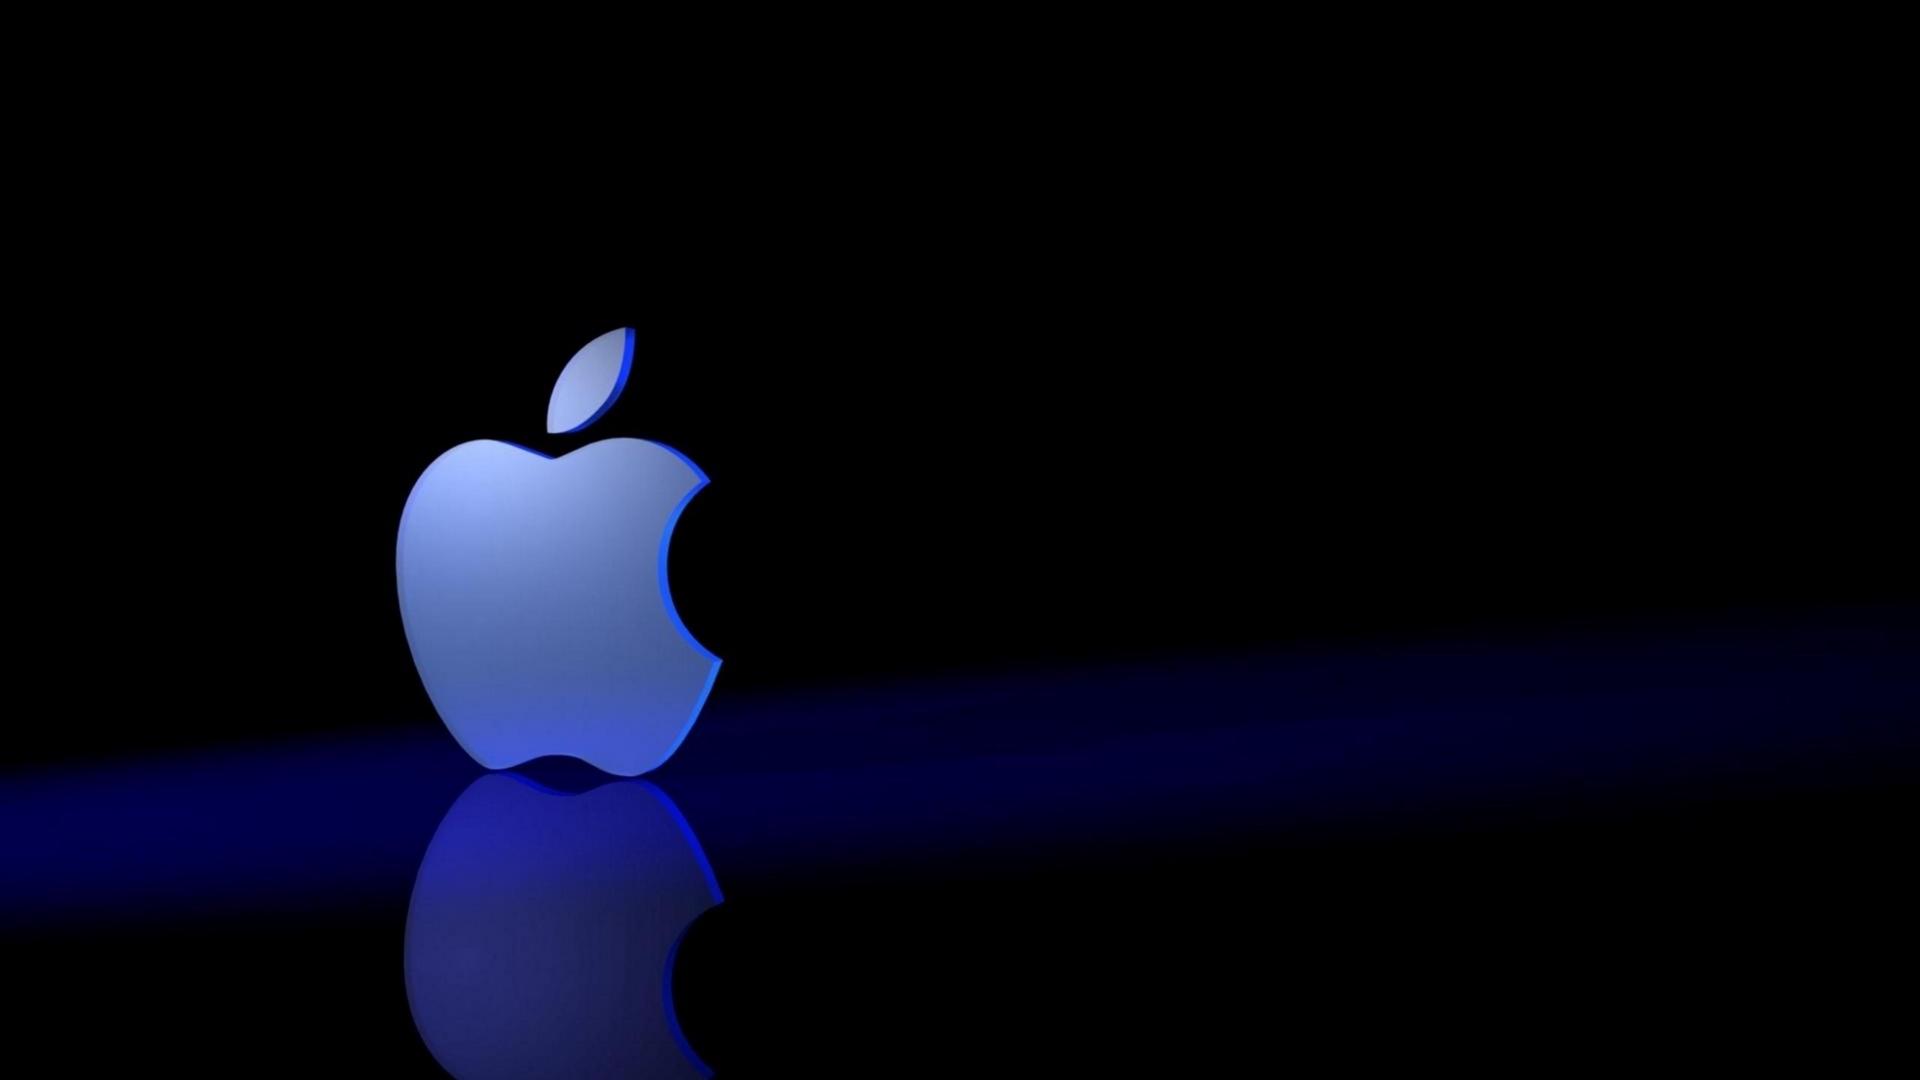 Apple Mac Brand logo with Neon Light Wallpaper